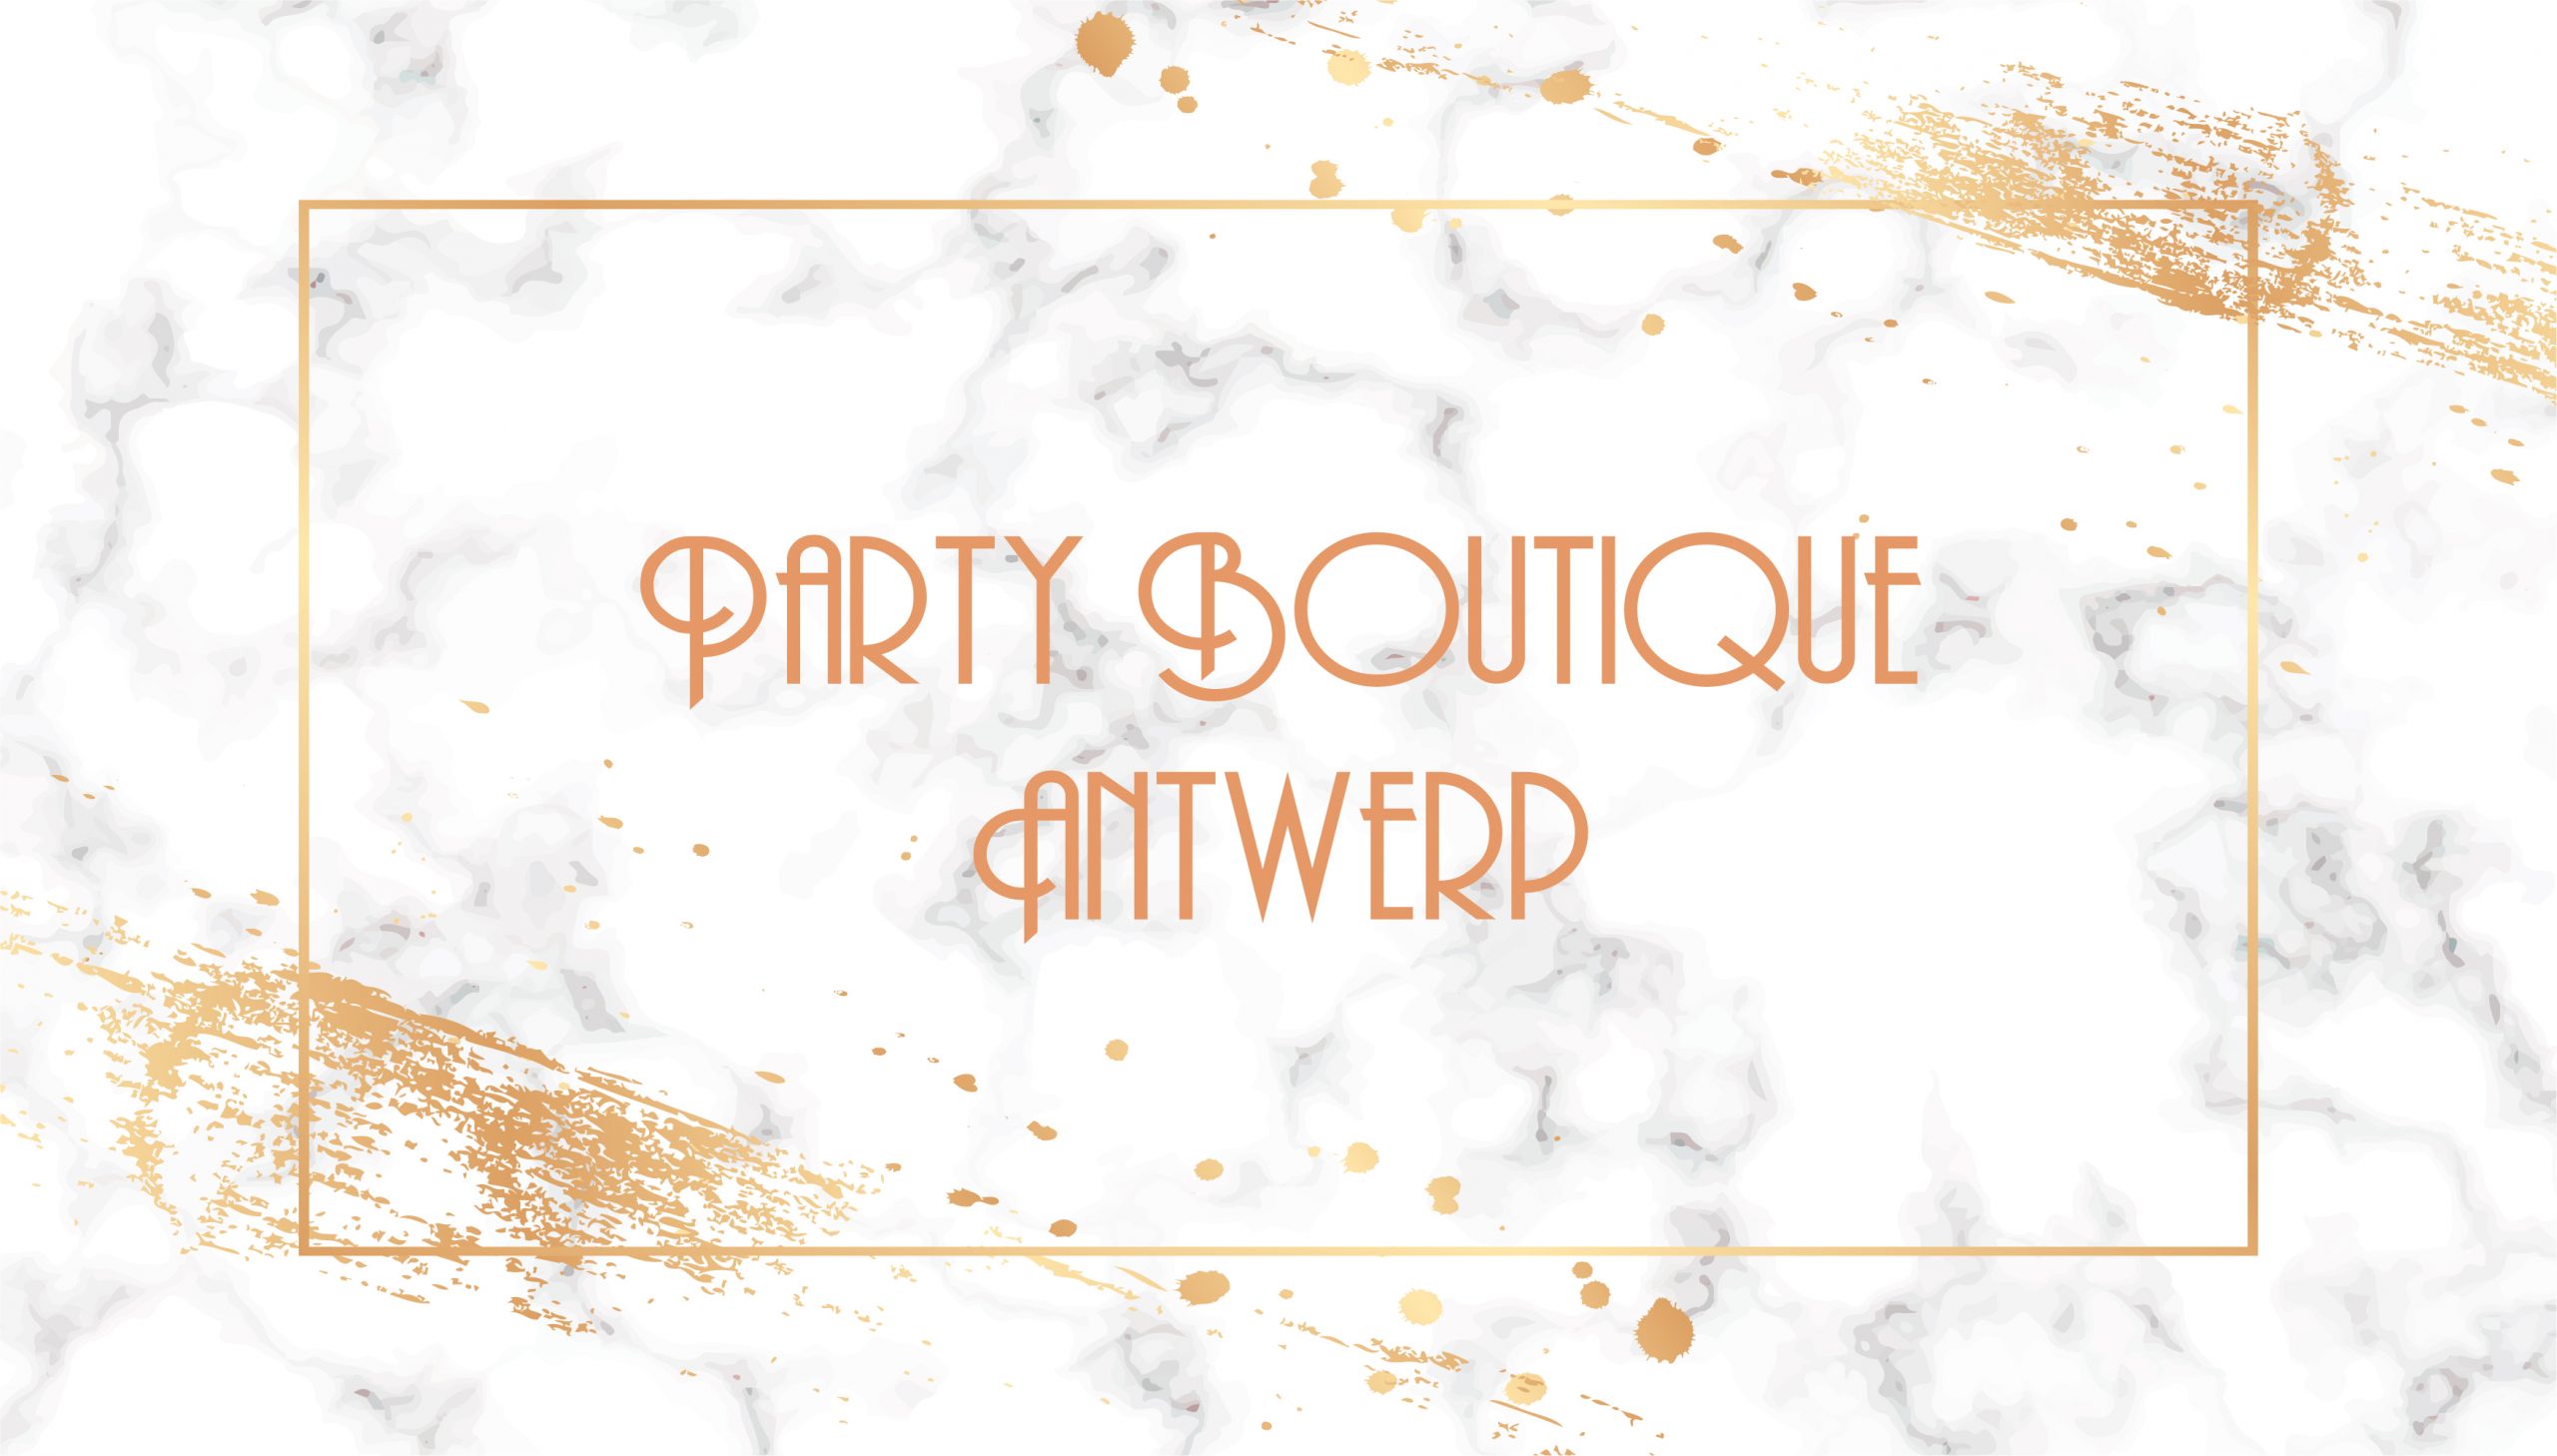 Party Boutique Antwerp